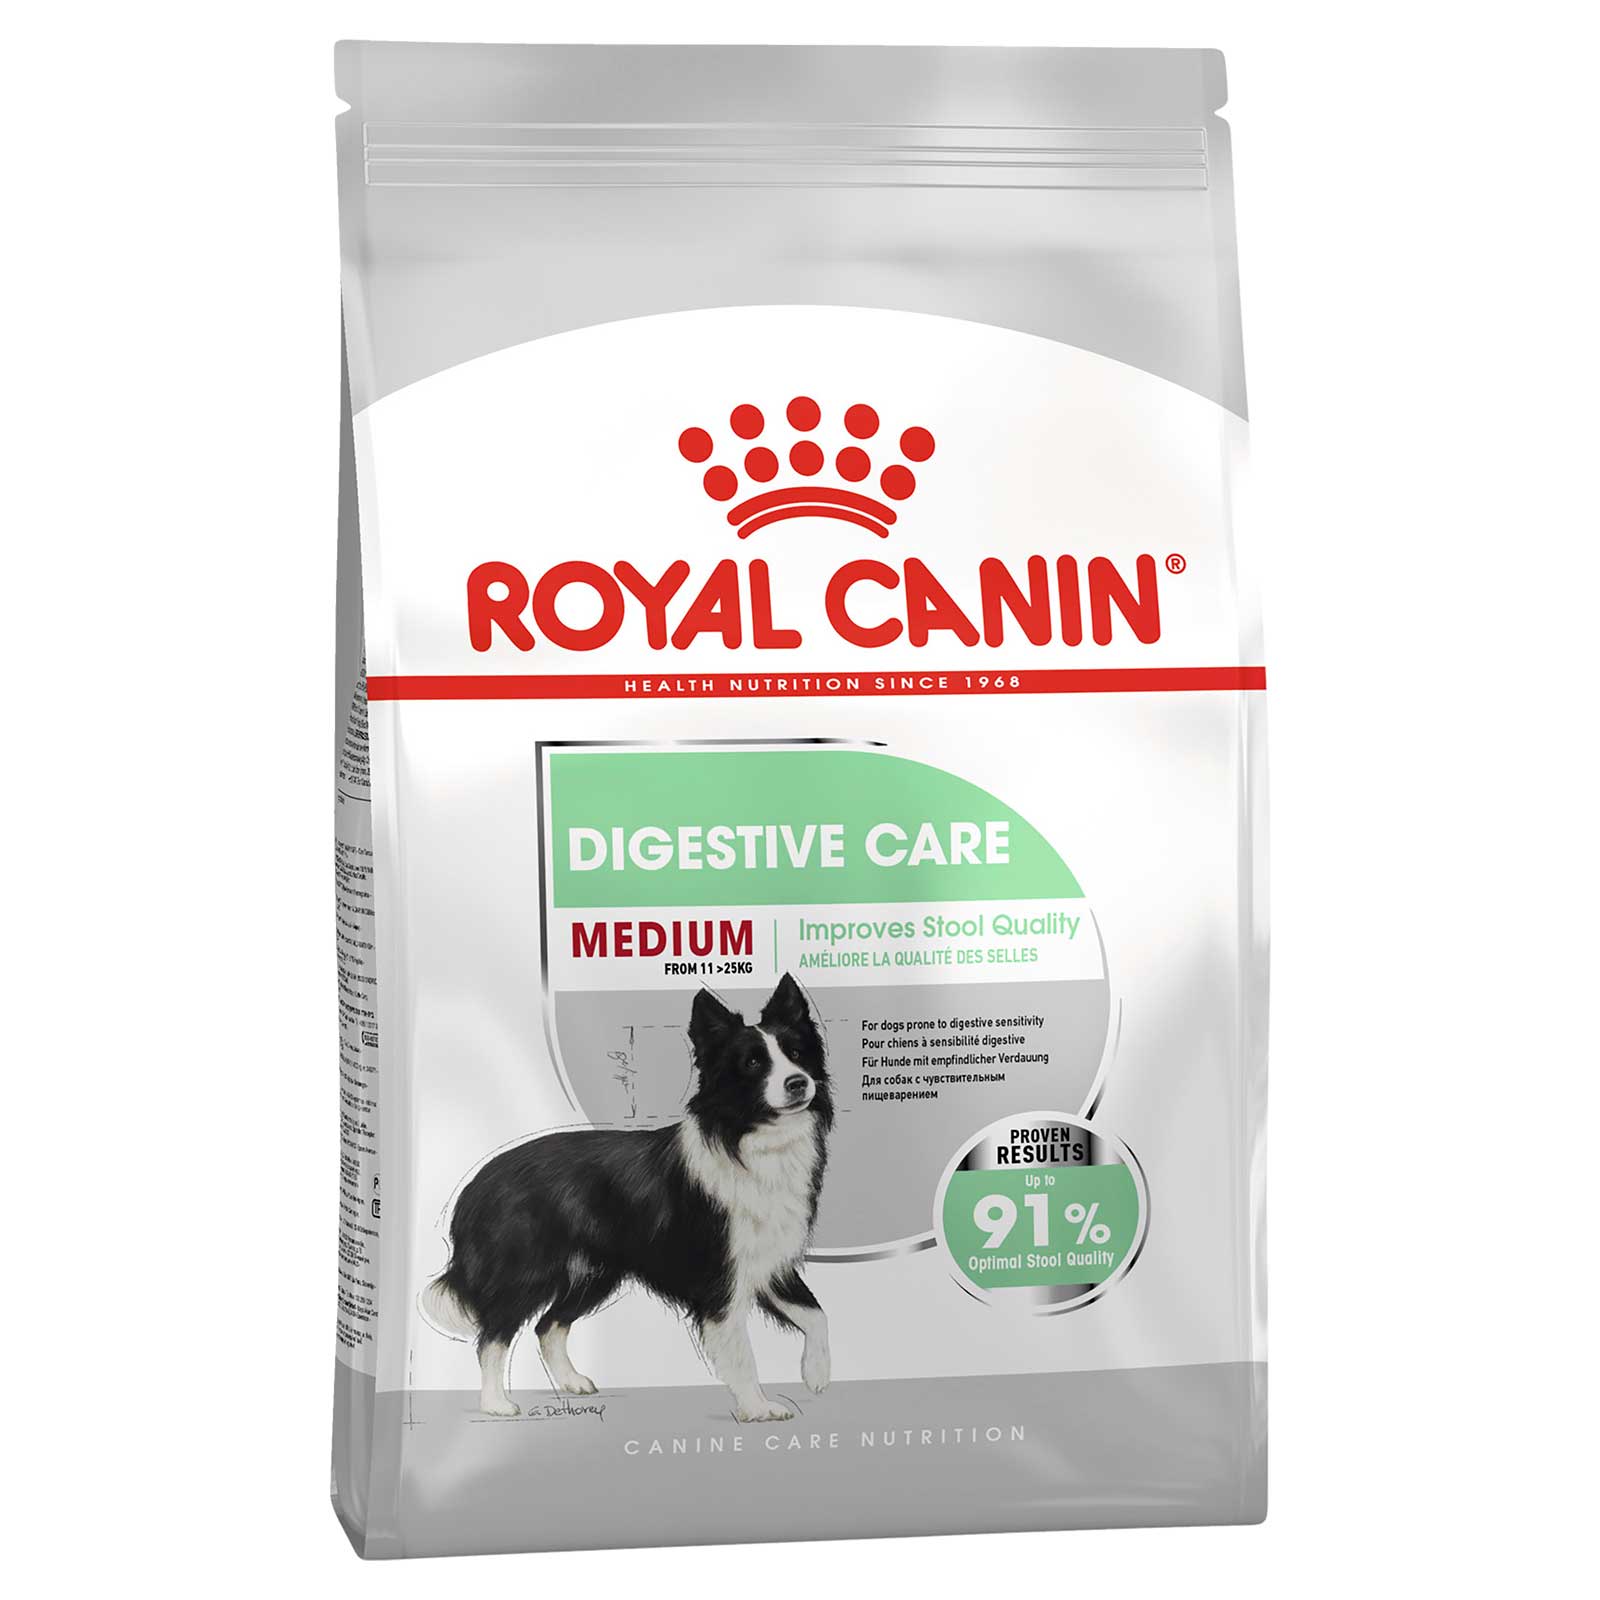 Royal Canin Dog Food Digestive Care Medium